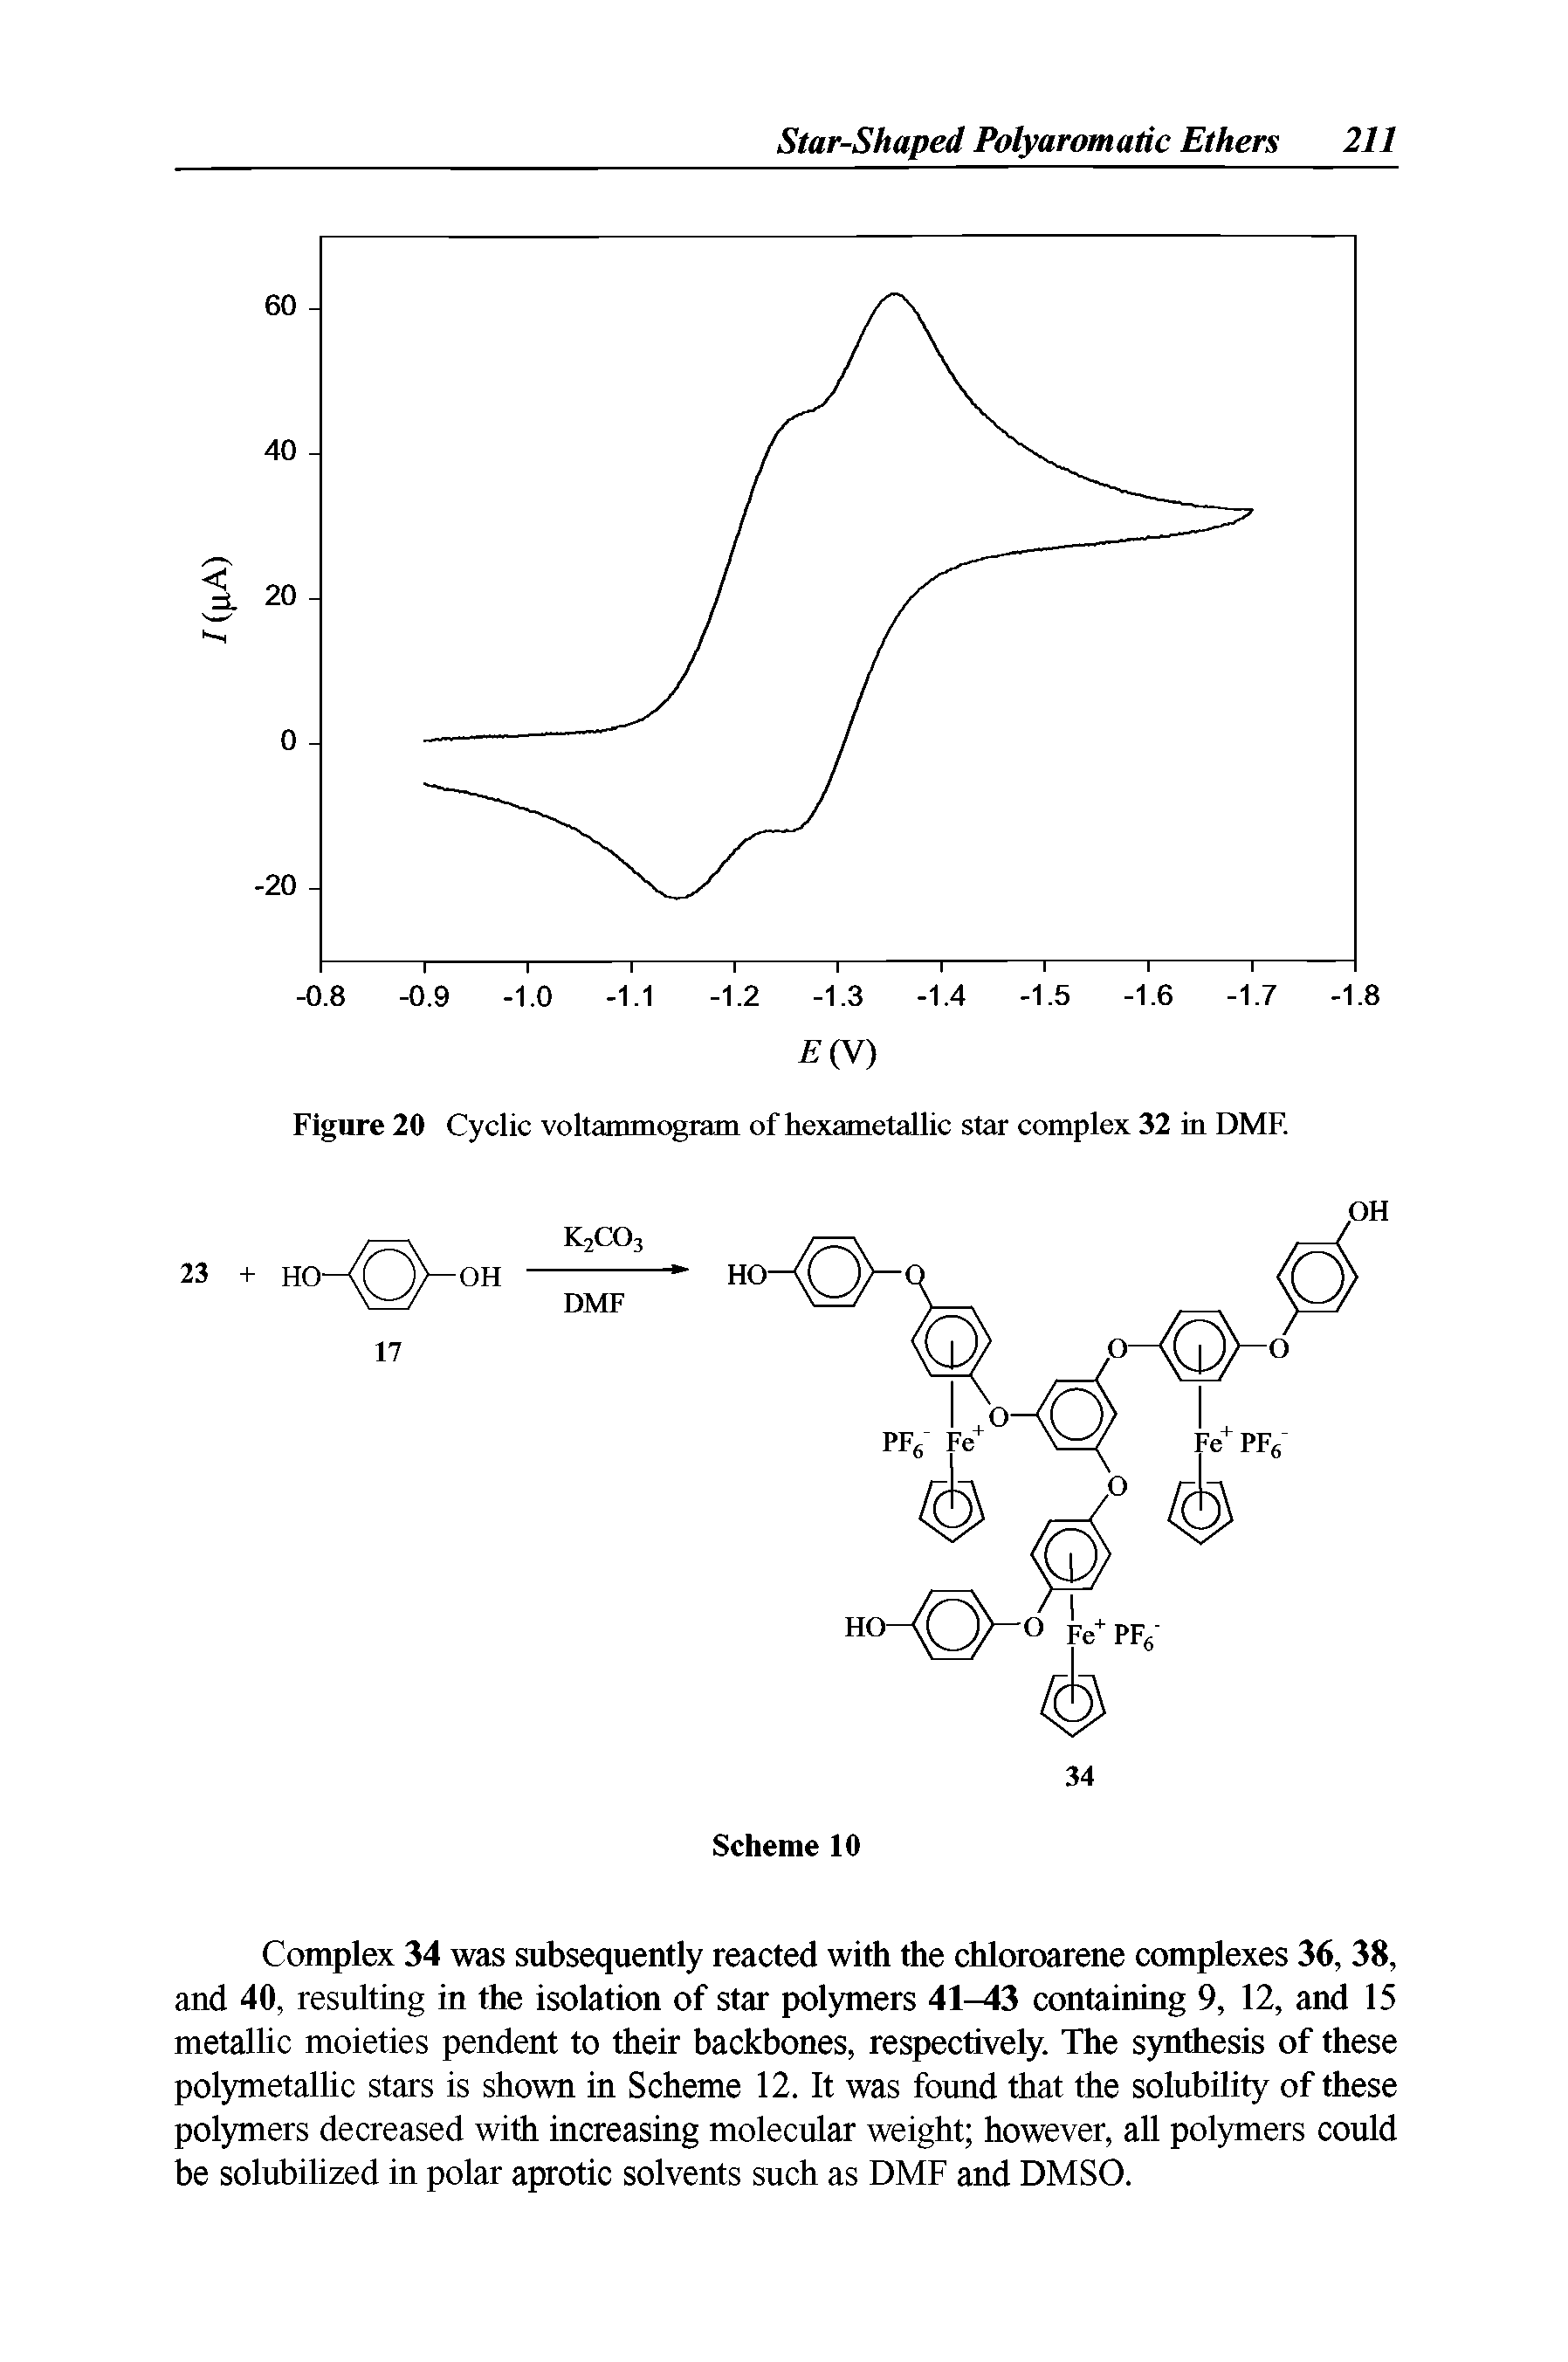 Figure 20 Cyclic vollammogram of hexametallic star complex 32 in DMF.